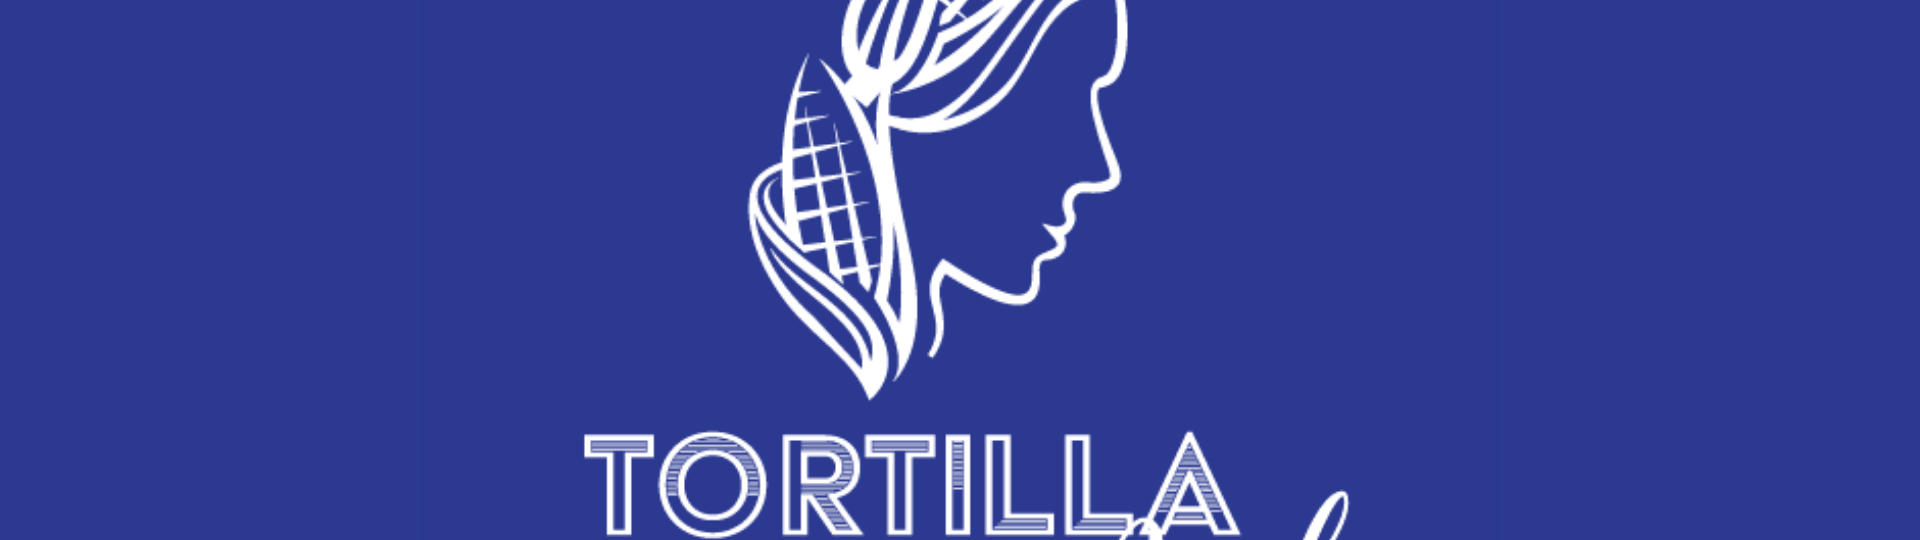 Tortilla Real Mexican Restaurant logo